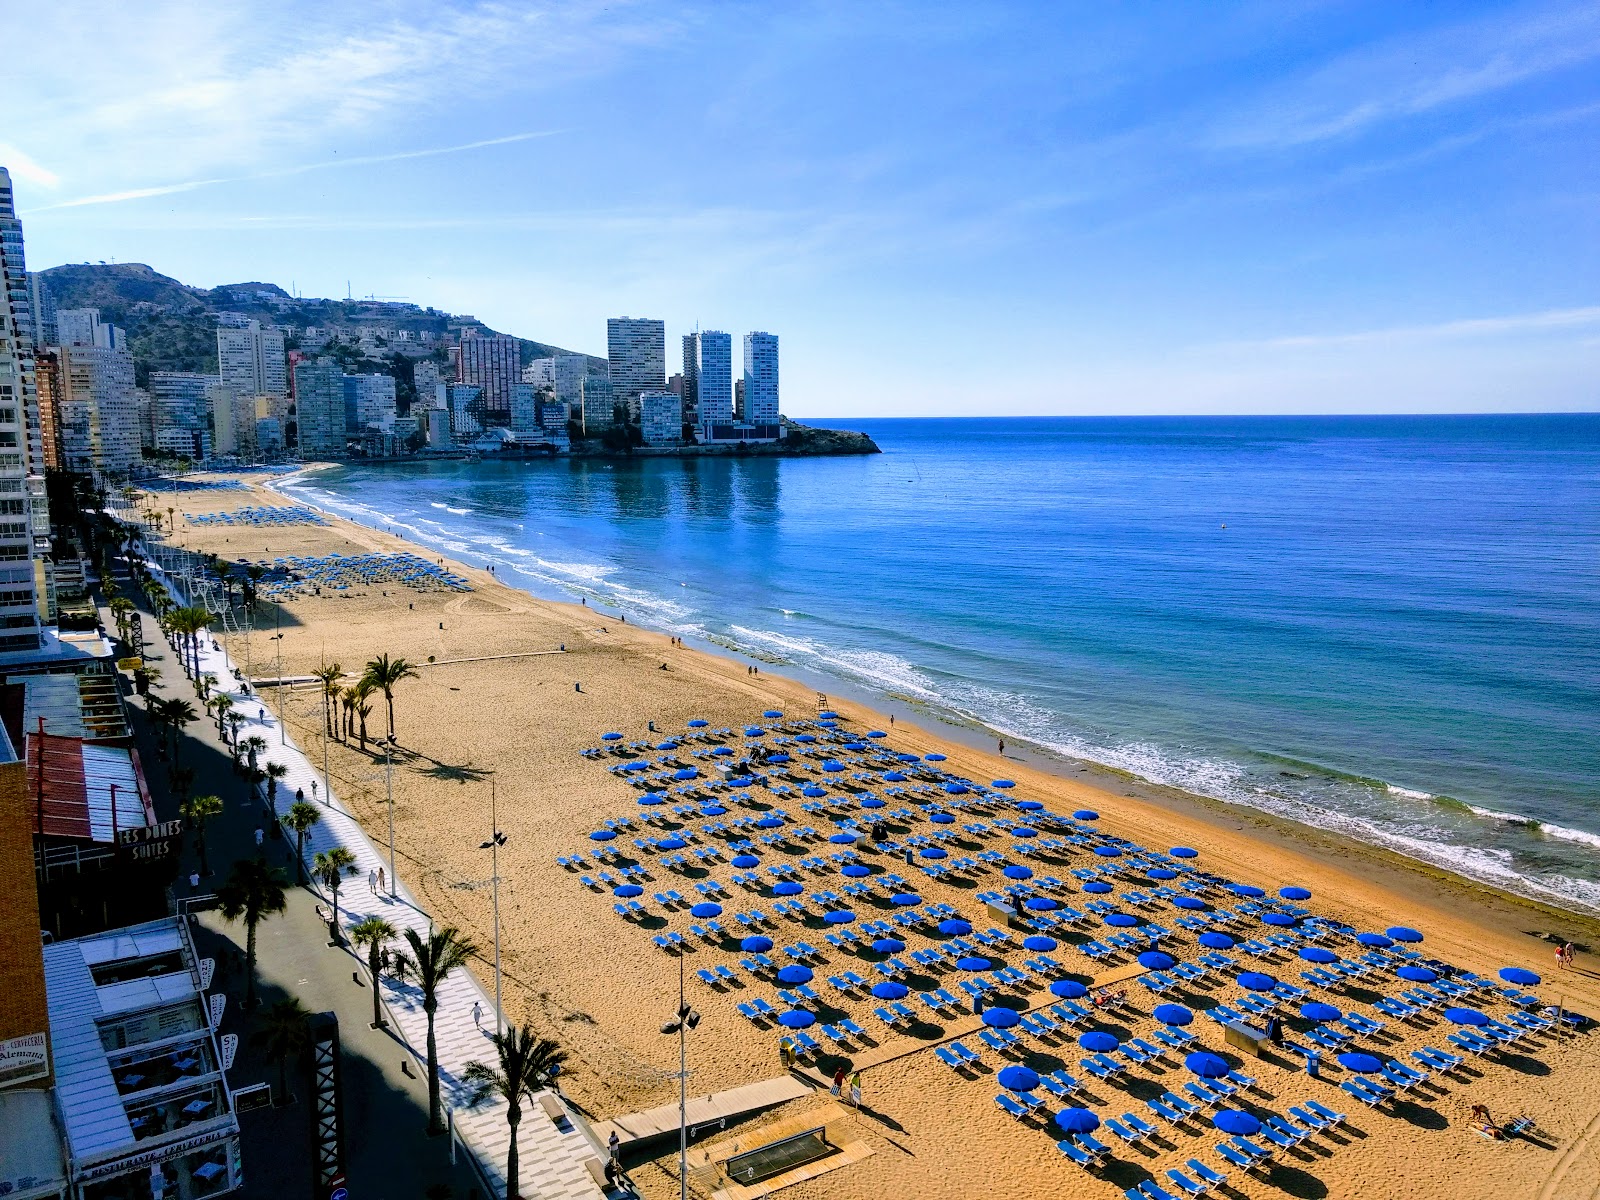 Foto av Levante strand med blått vatten yta